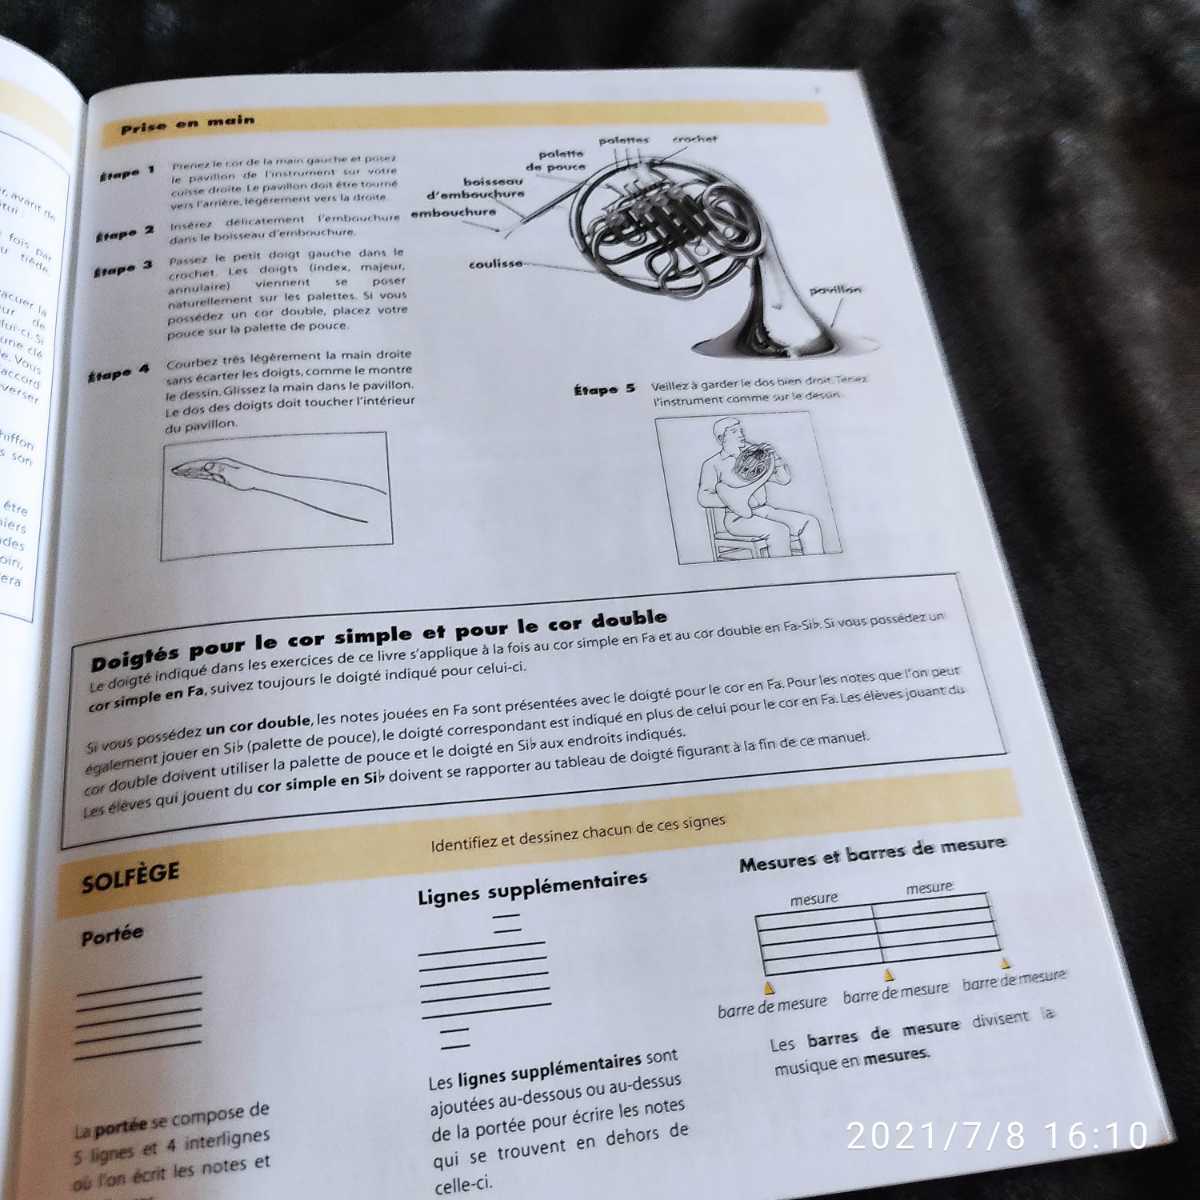  валторна manual 3 шт. book1(DVD,CD) book2(CD) book3(CD) бесплатная доставка 